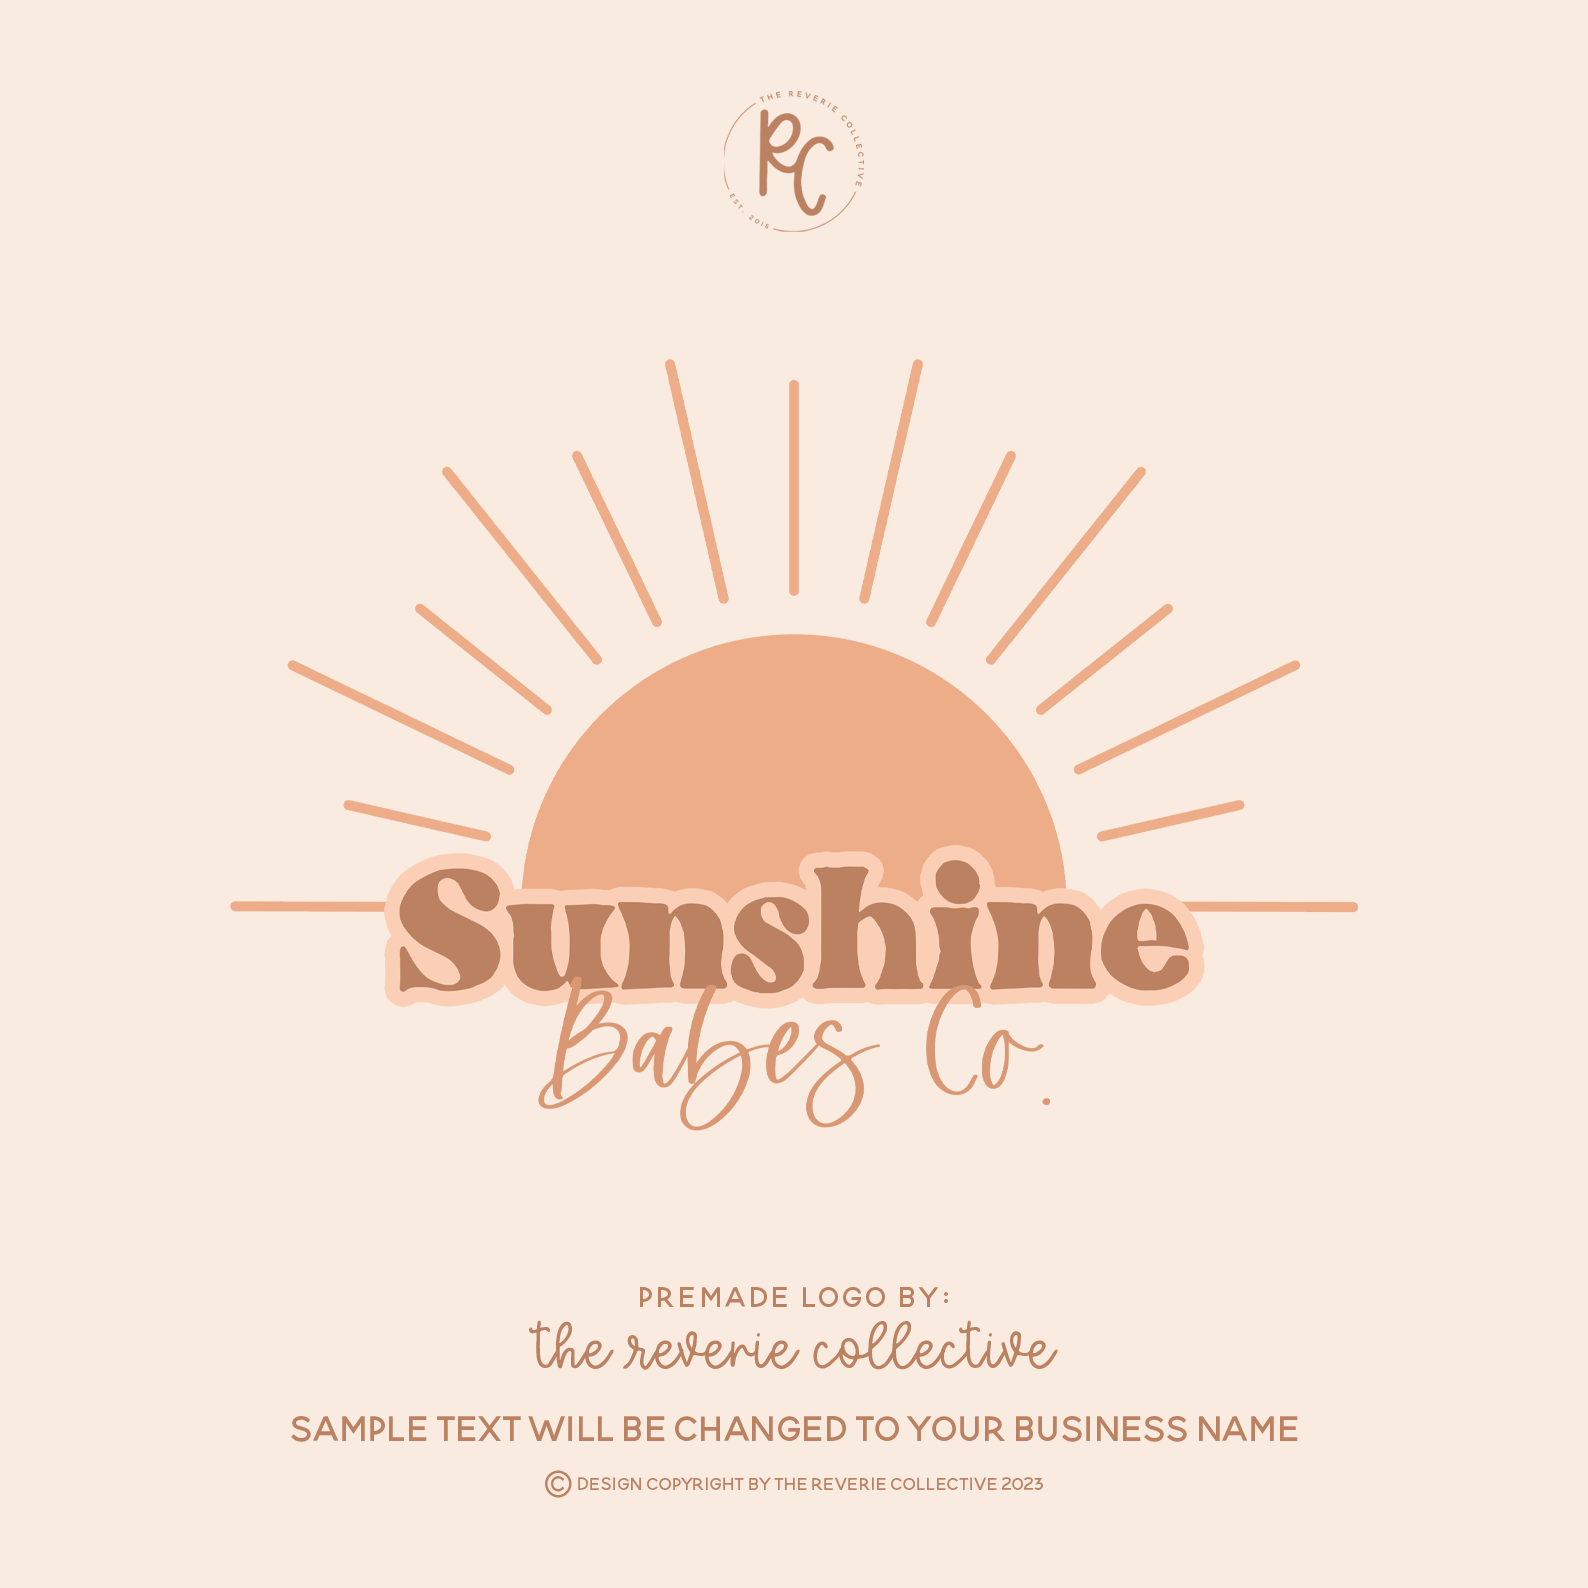 Sunshine Babes Co., Premade Logo Design